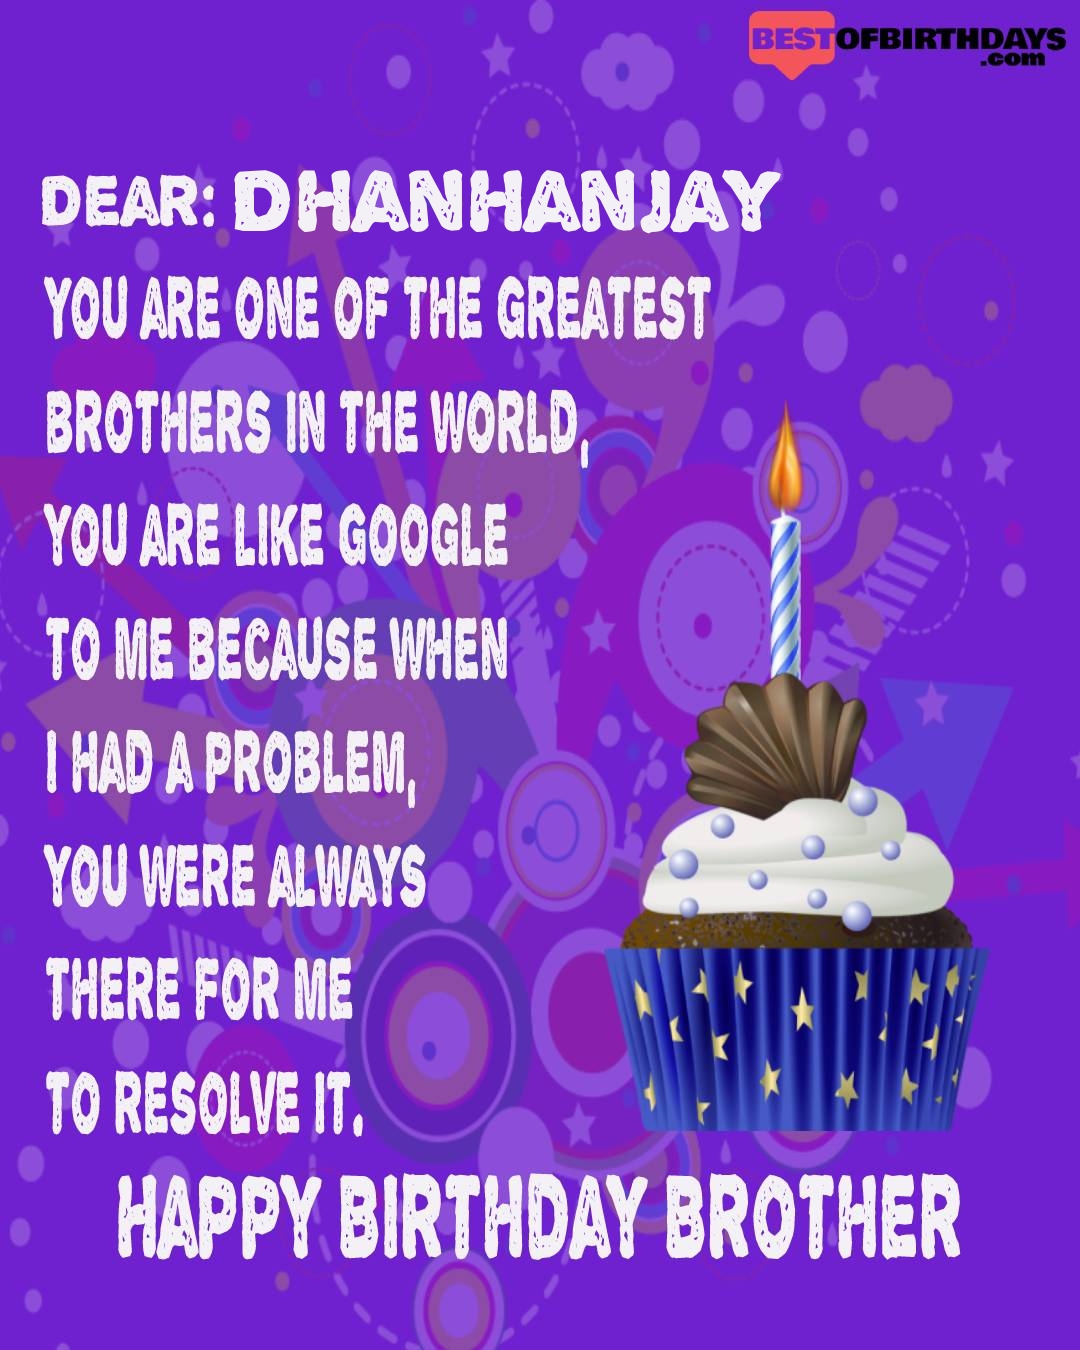 Happy birthday dhanhanjay bhai brother bro